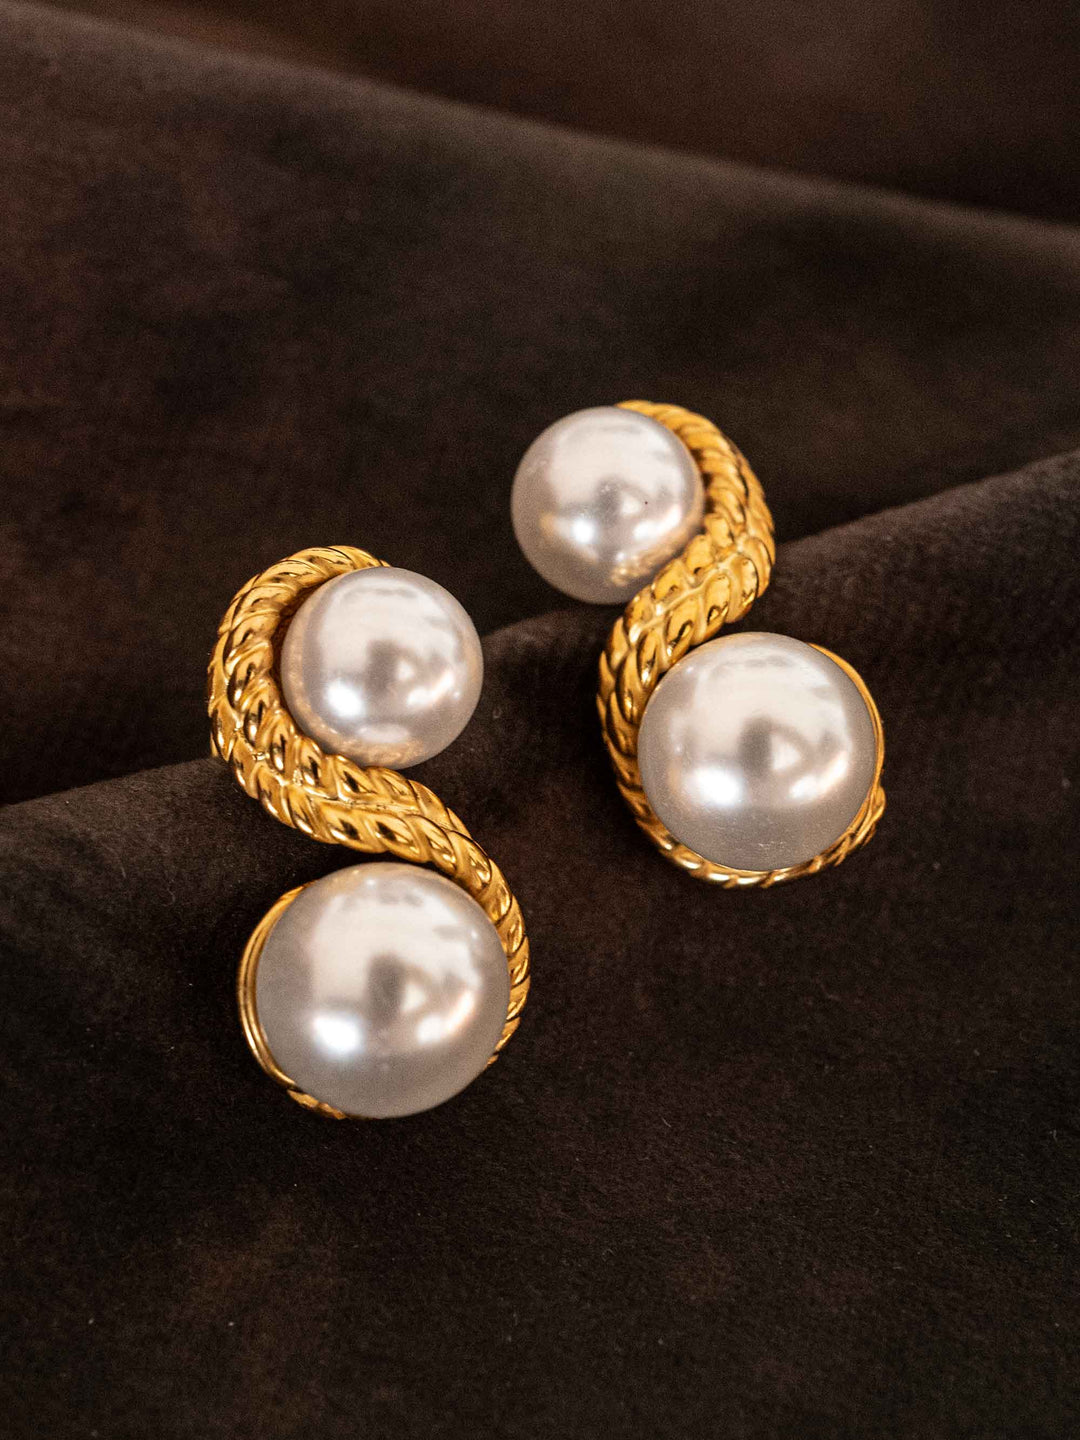 One gold pearl earrings